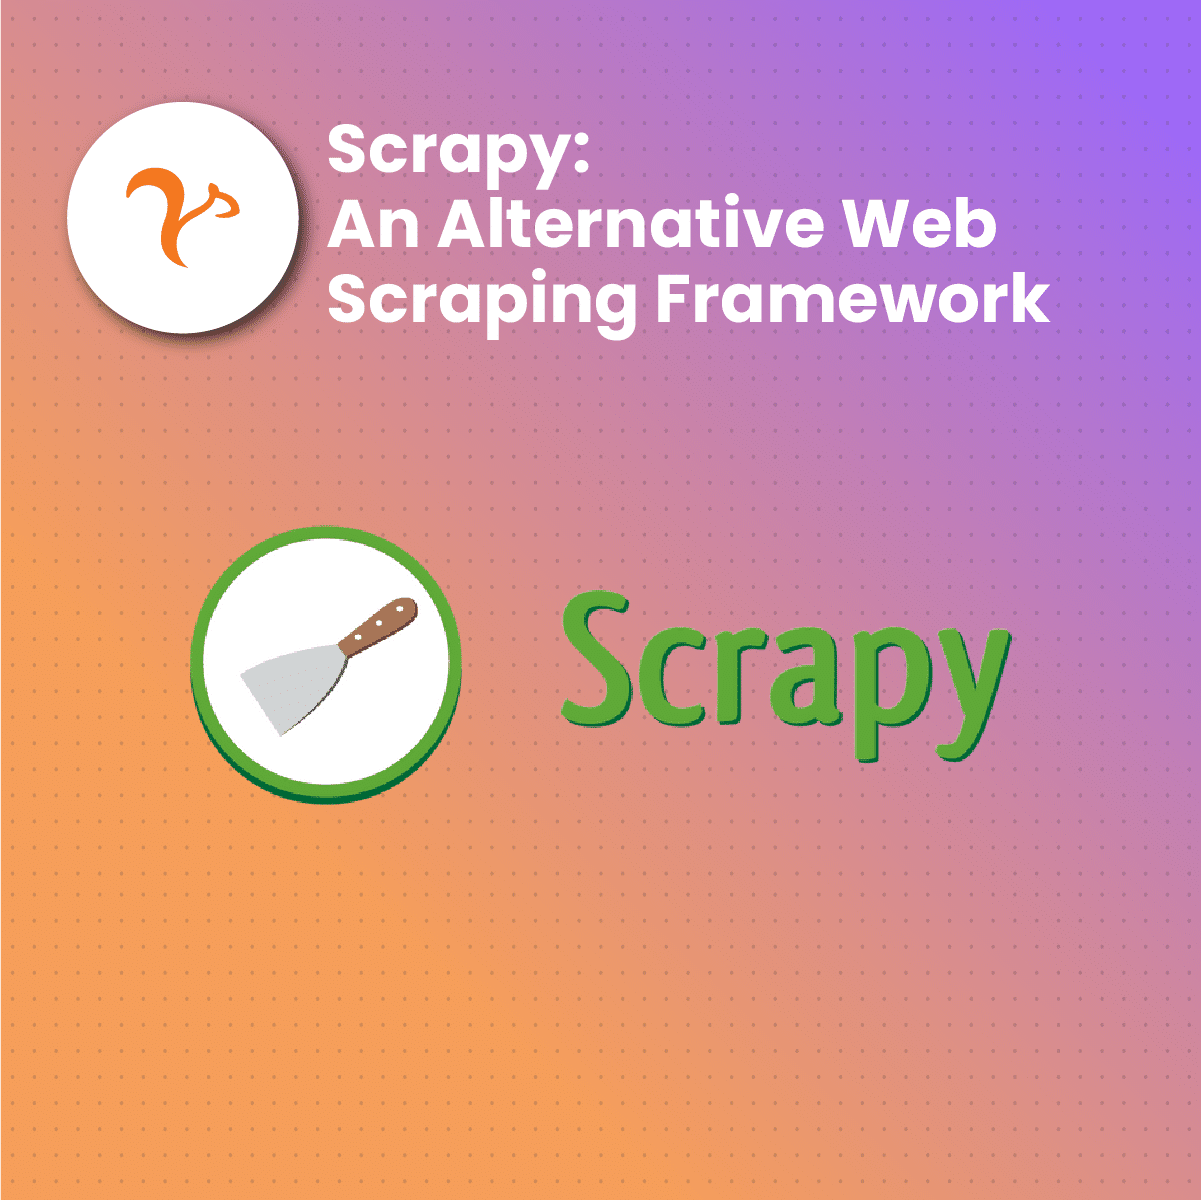 Scrapy: An Alternative Web Scraping Framework